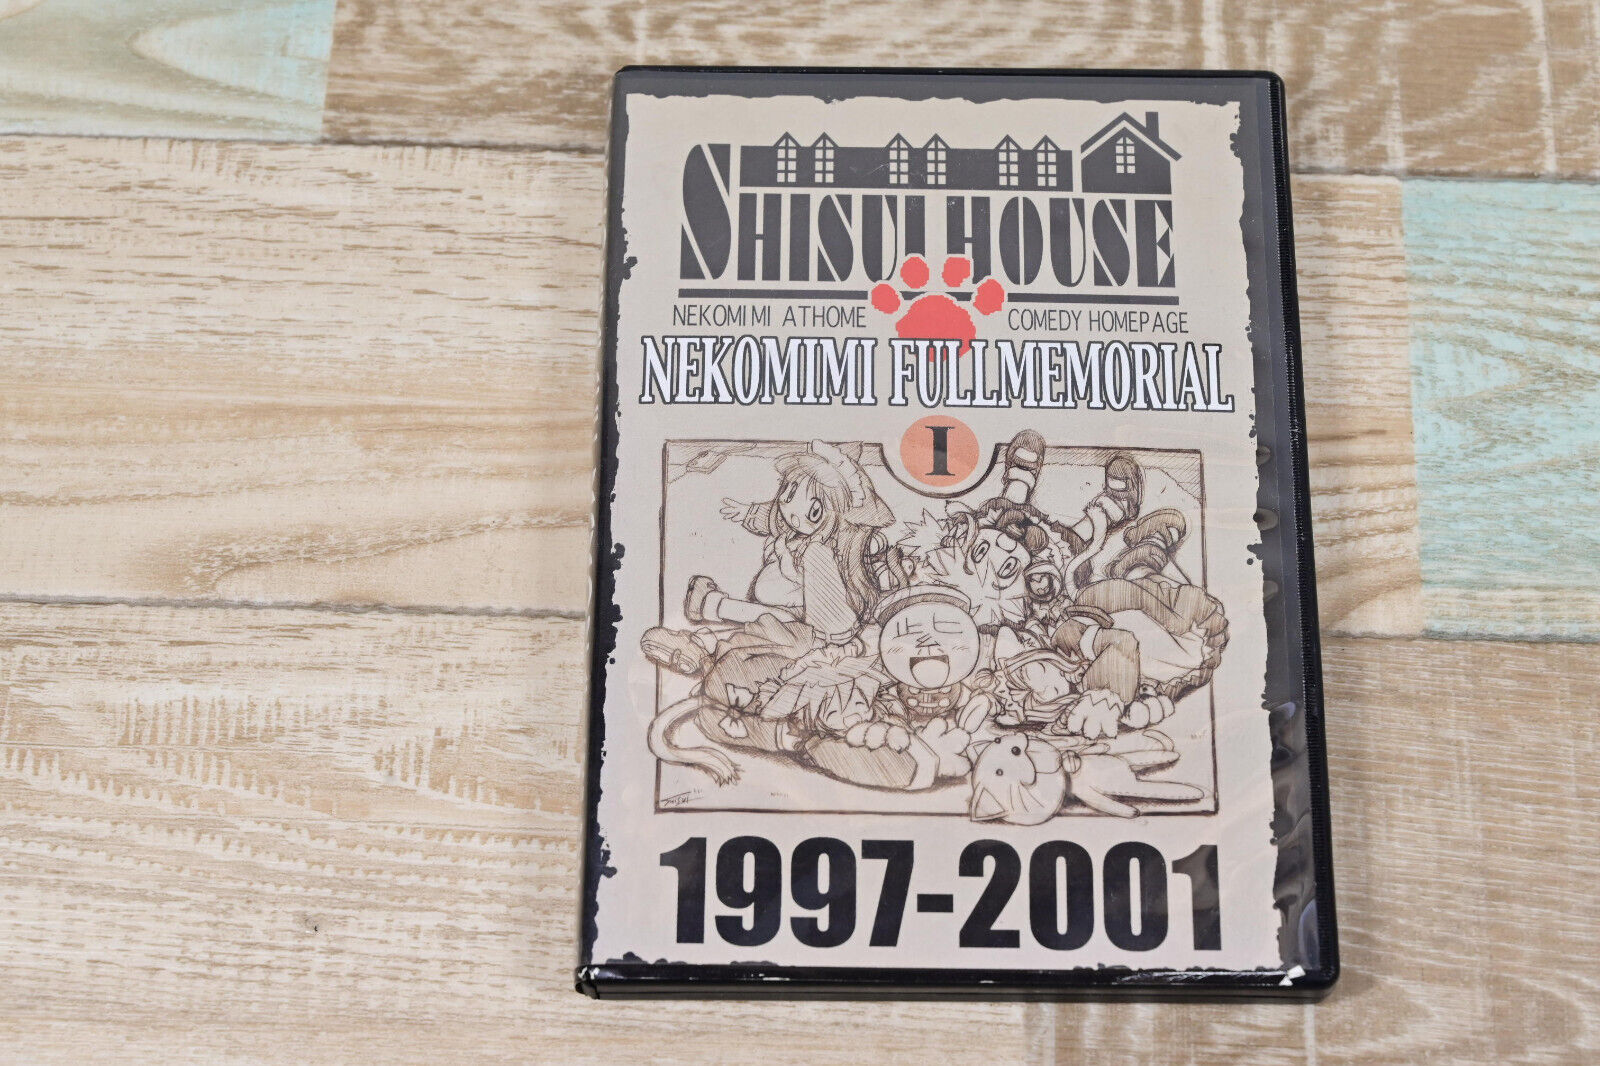 Rare Nekomimi Full memorial 1997-2001 Shisui house Windous mac Japanese Japan